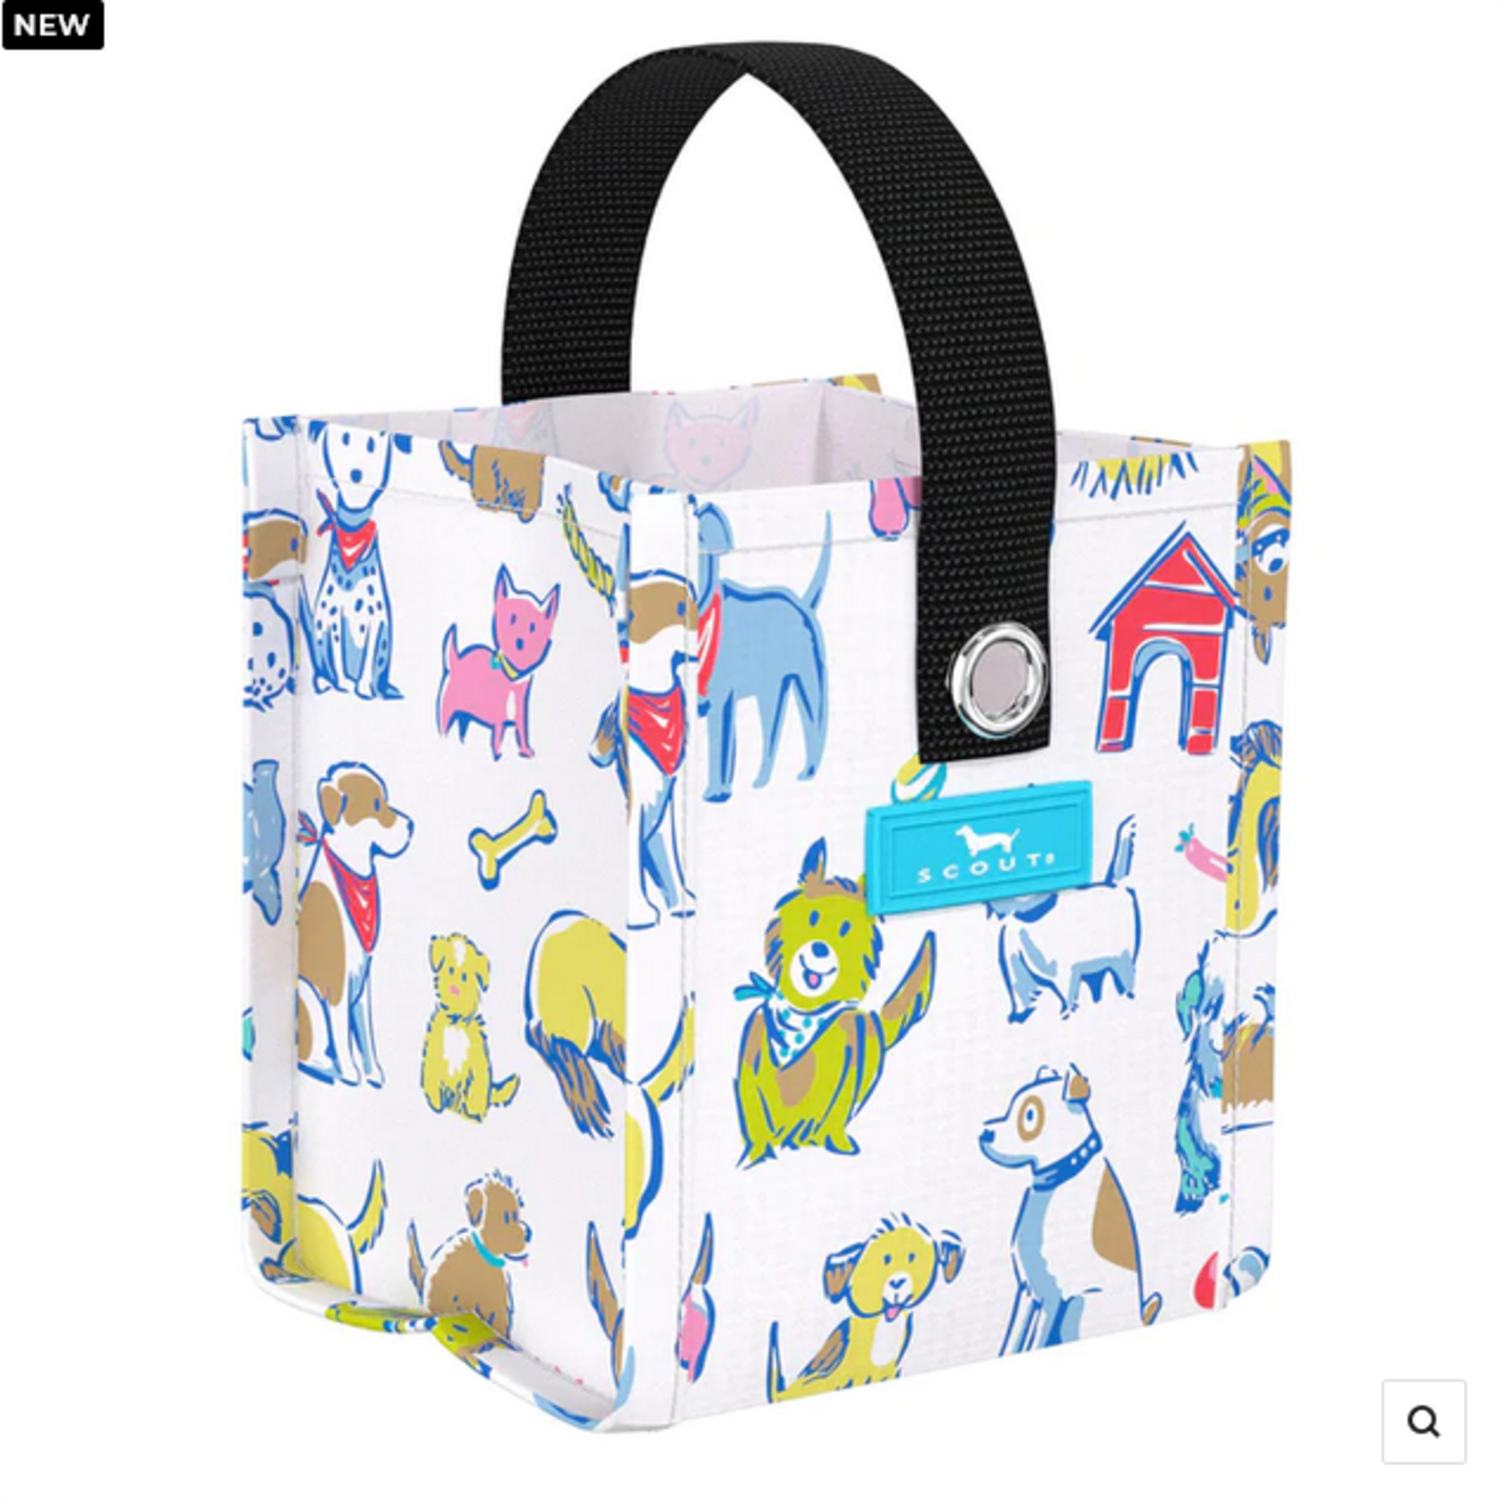 Reusable shopping bag - Top png files on